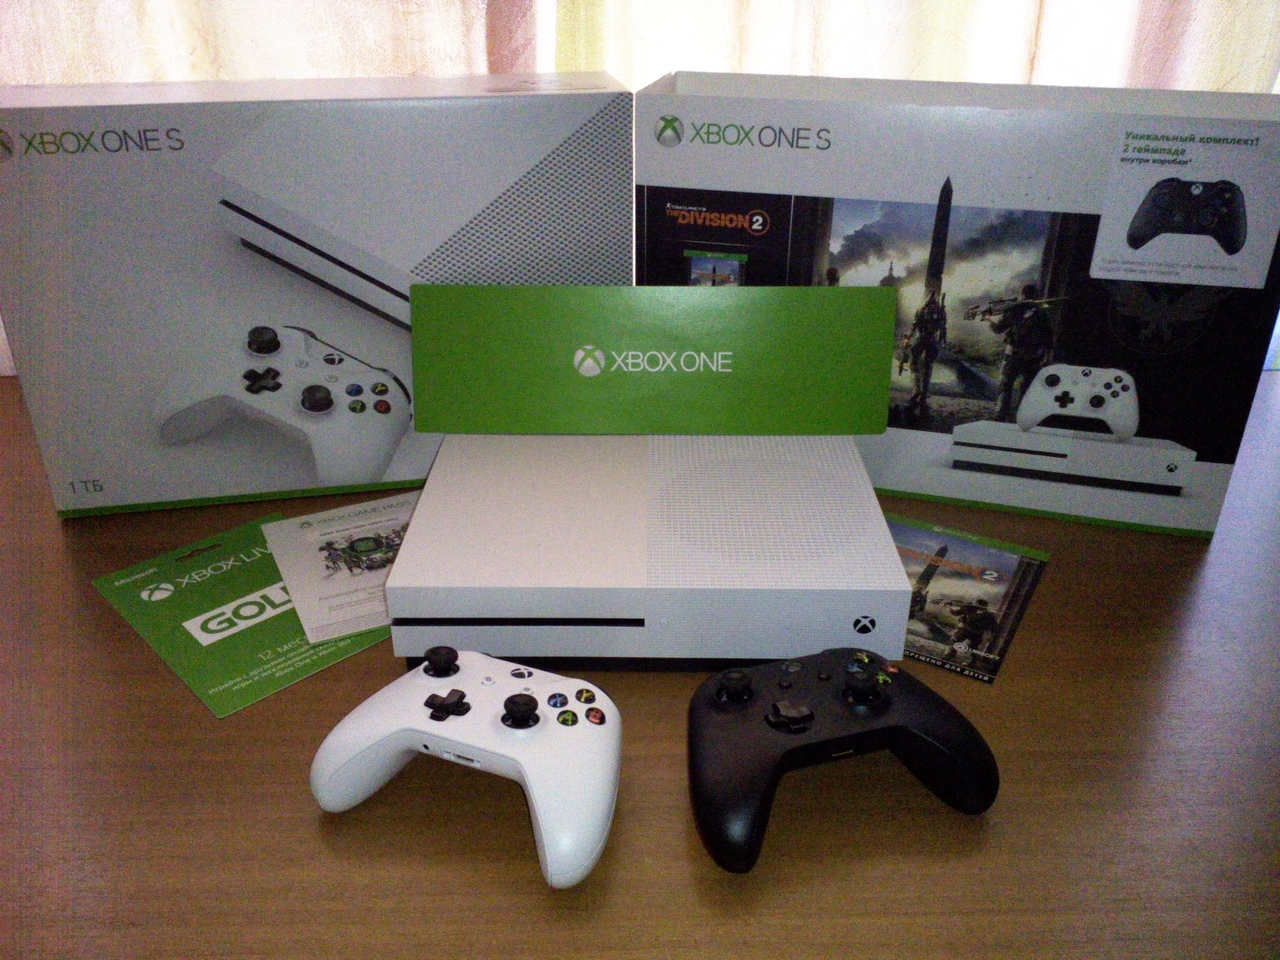 Xbox series купить в москве. Заказанная приставка Xbox Series s. Xbox Series x корпус приставки индивидуальный. Приставка для телевизора игровая Xbox 4. Игровая консоль Xbox в интерьере.